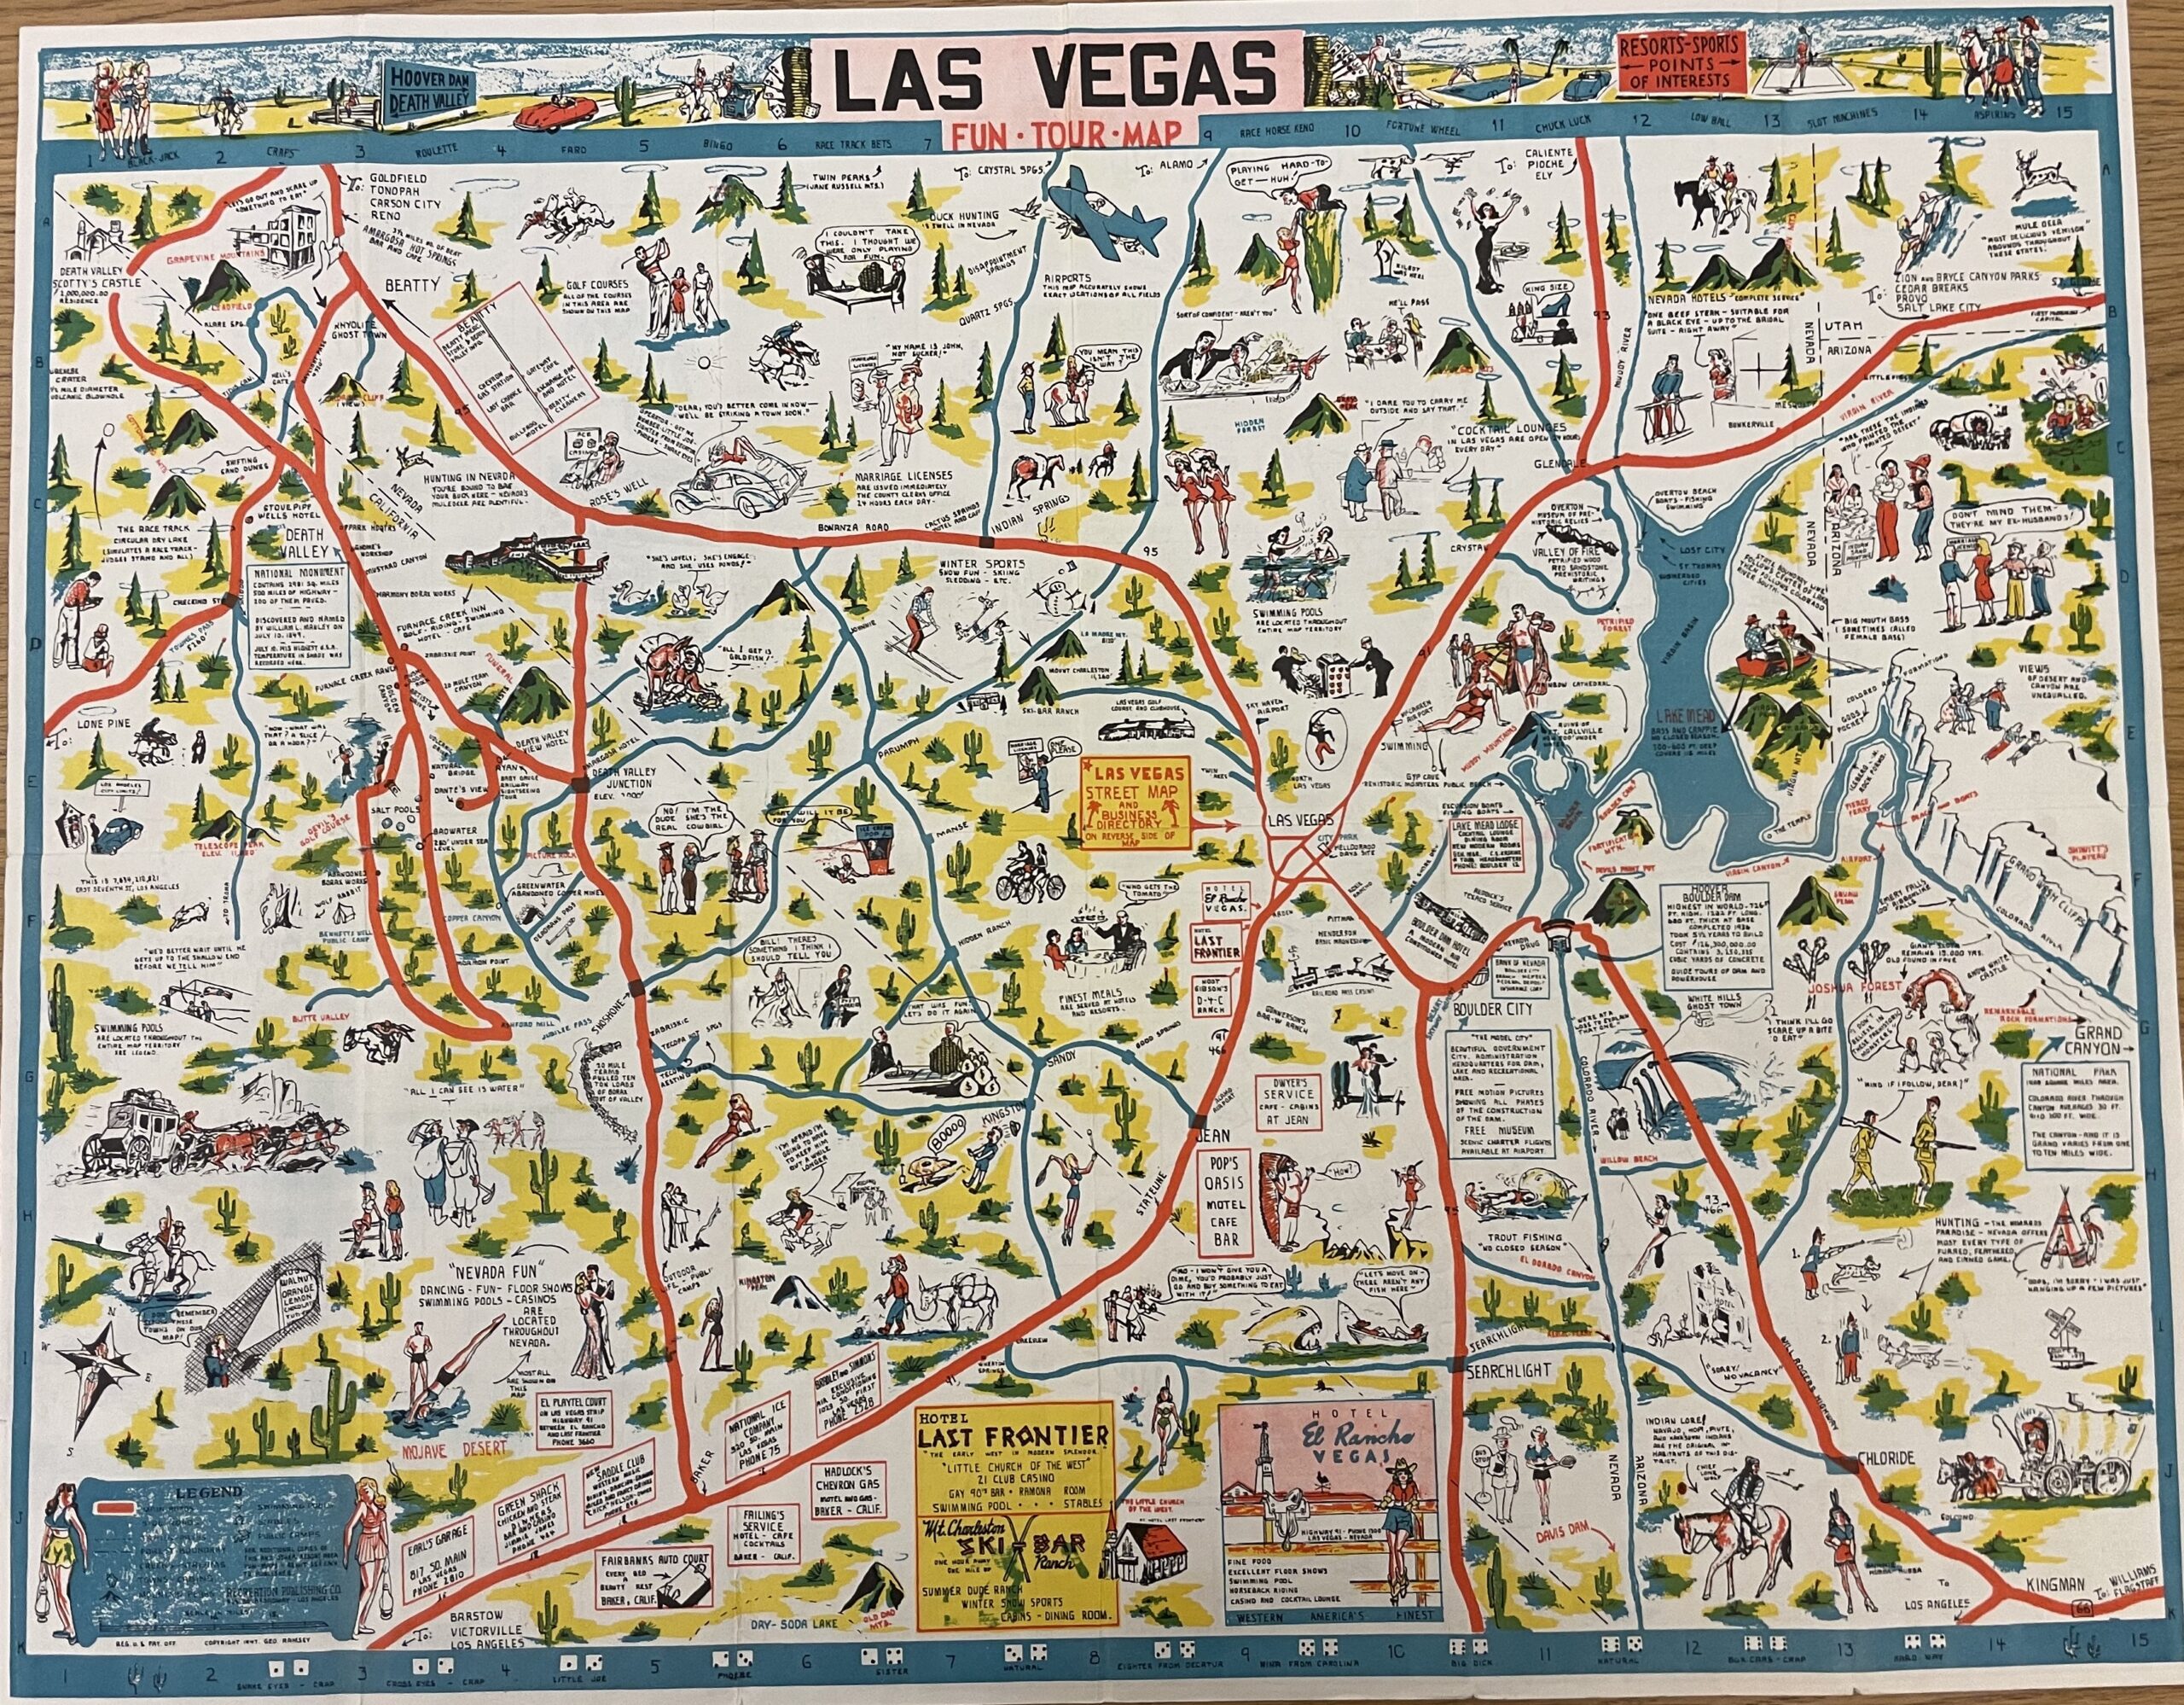 Las Vegas Tourist Map from 1947